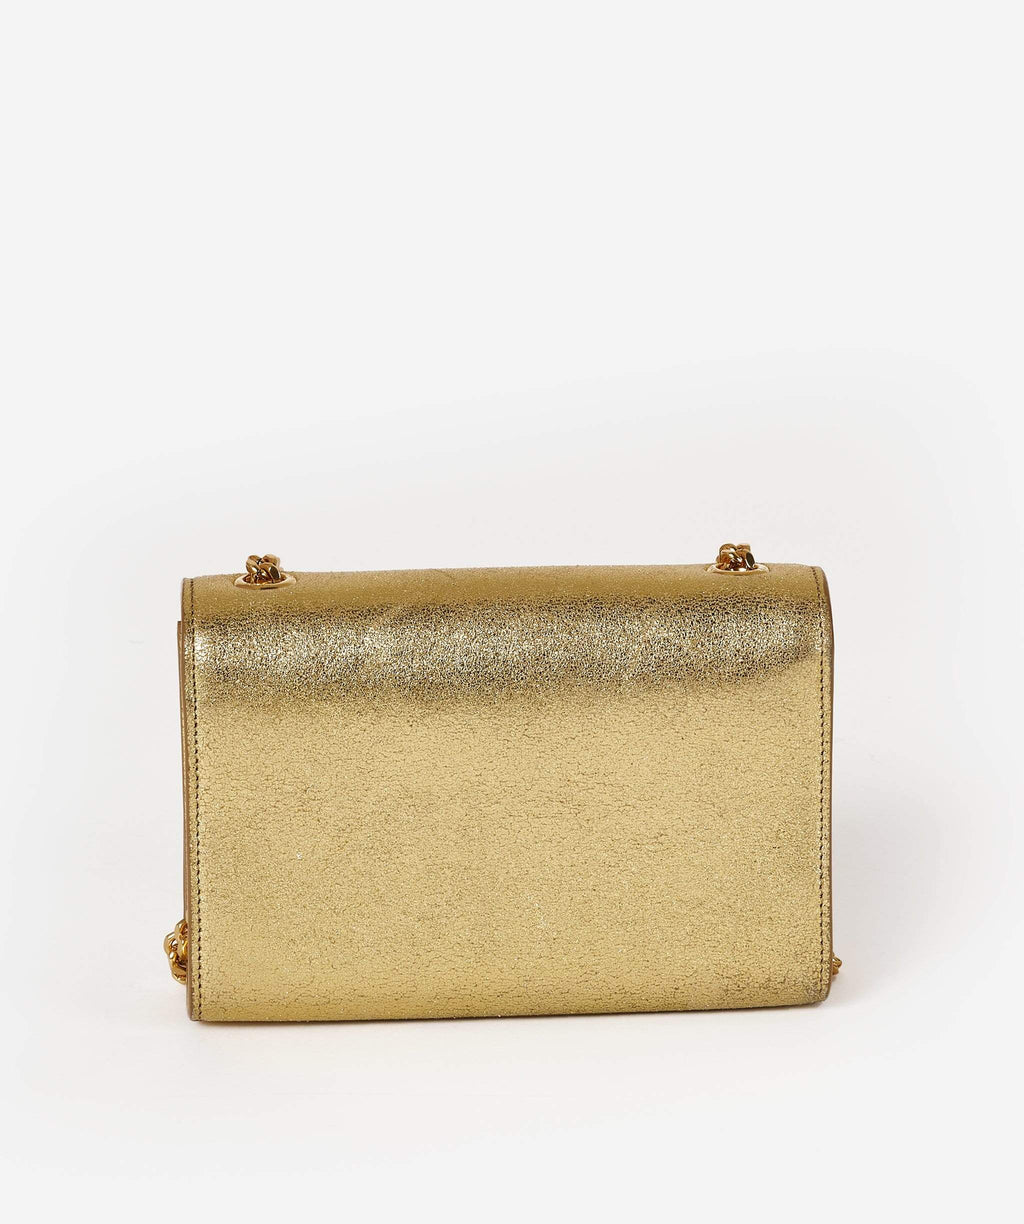 East side leather handbag Saint Laurent Gold in Leather - 25301673